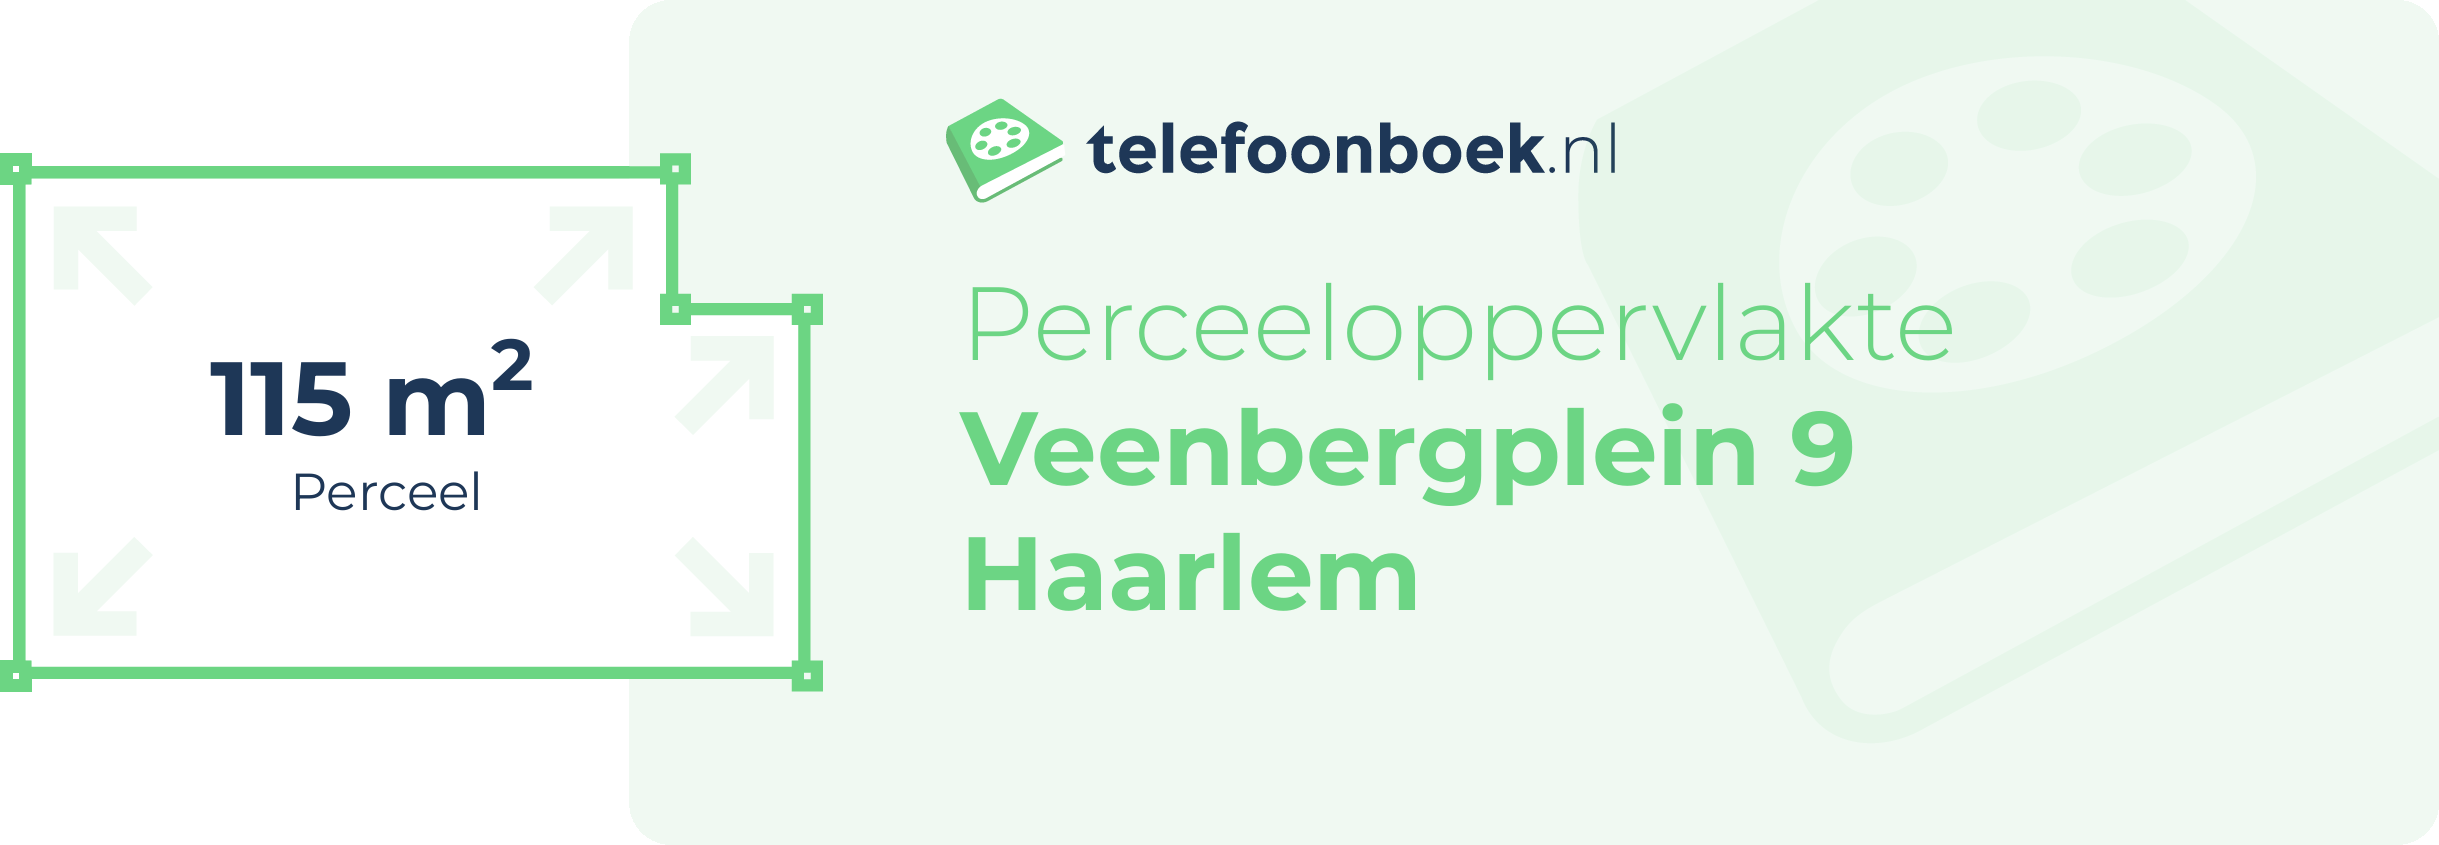 Perceeloppervlakte Veenbergplein 9 Haarlem